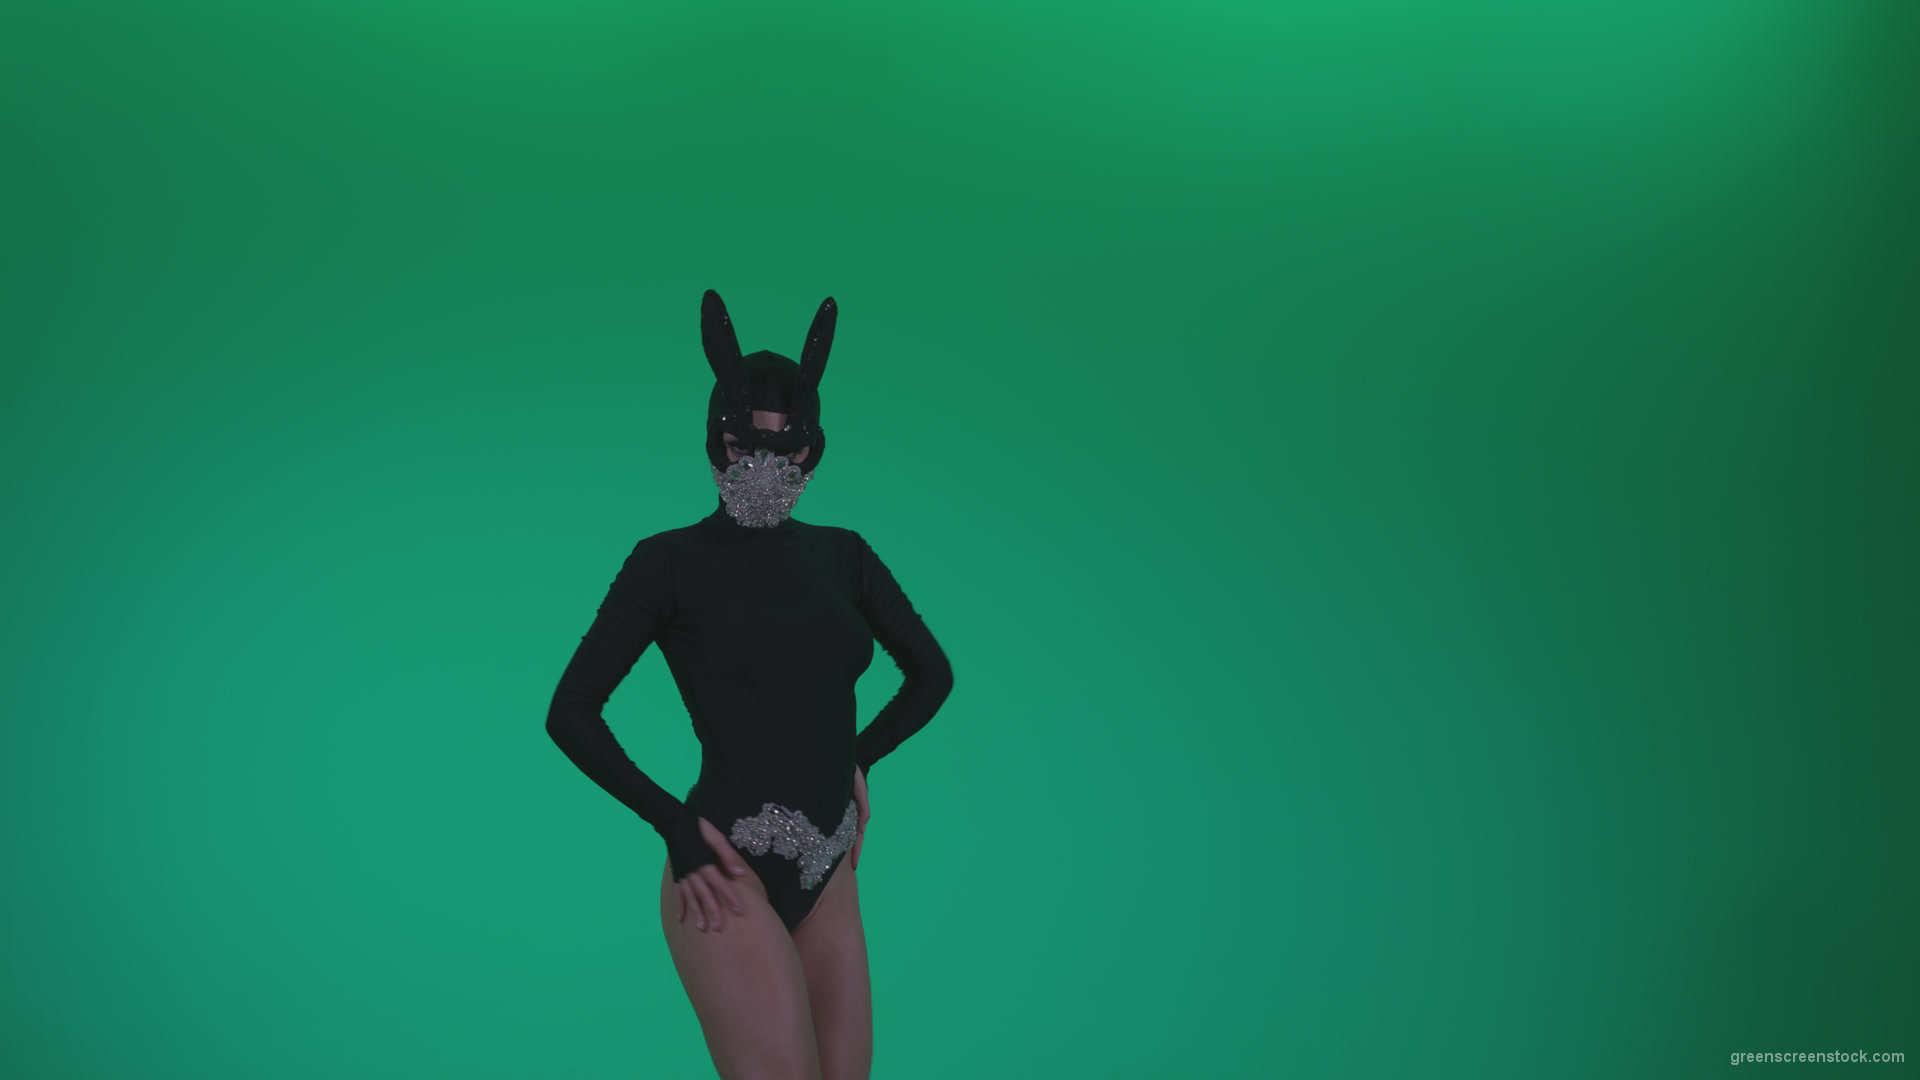 Go-go-Dancer-Black-Rabbit-u14-Green-Screen-Video-Footage_008 Green Screen Stock